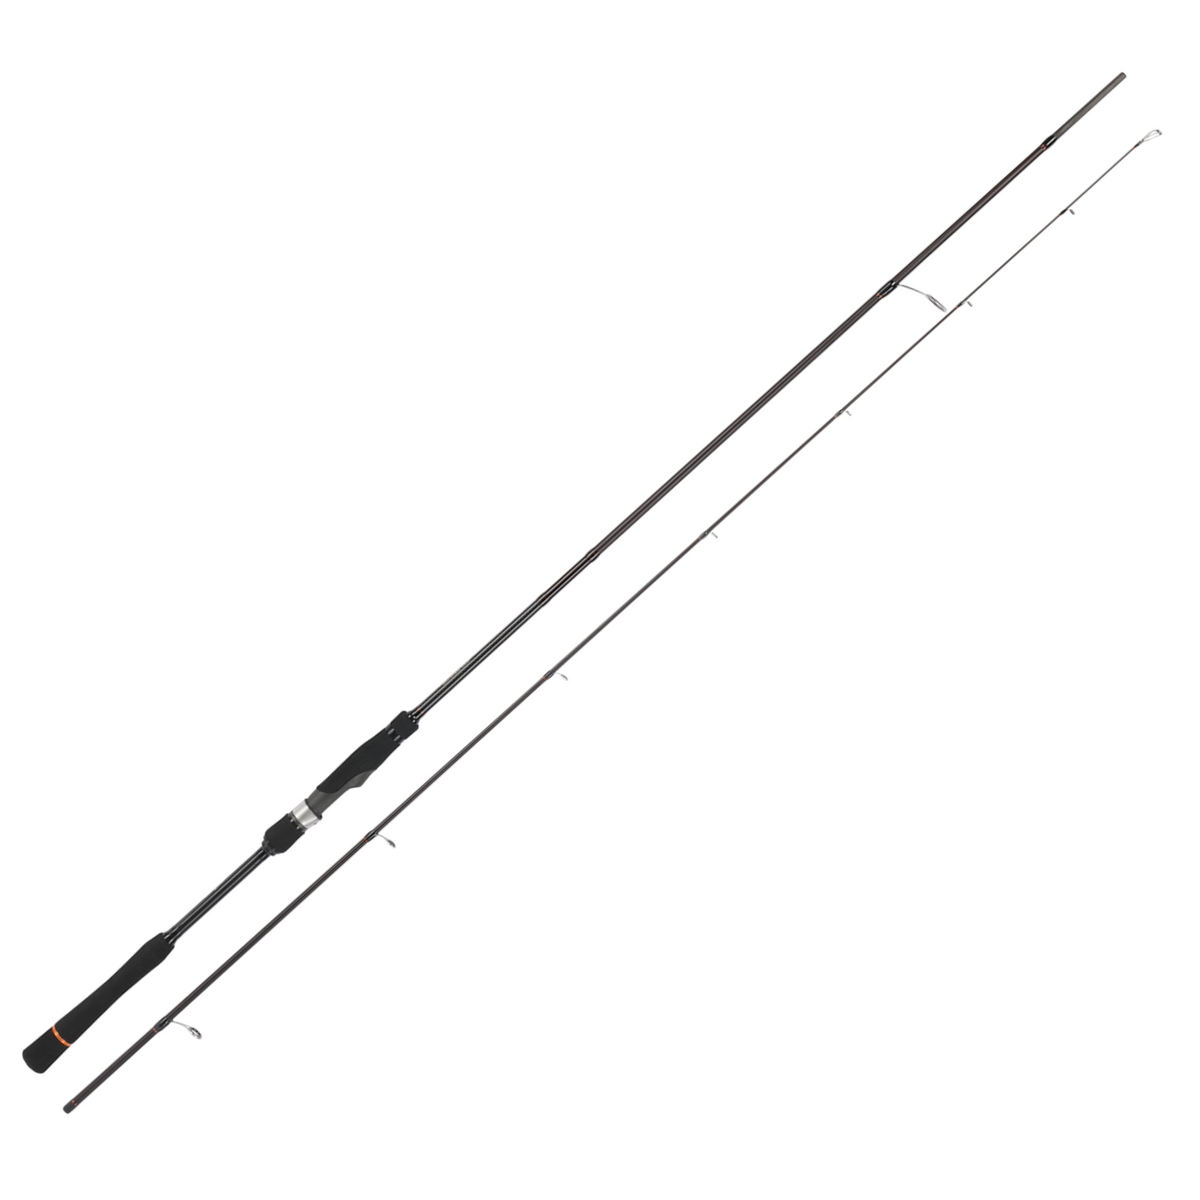 1 Section Fishing Bass Rod Light Weight Im10 Carbon FUJI  6'8''/7'0''/7'1''/7'2''/7'3''/7'4''/7'6''/8'0'' - China Bass Fishing Rod  and Fishing Equipment price